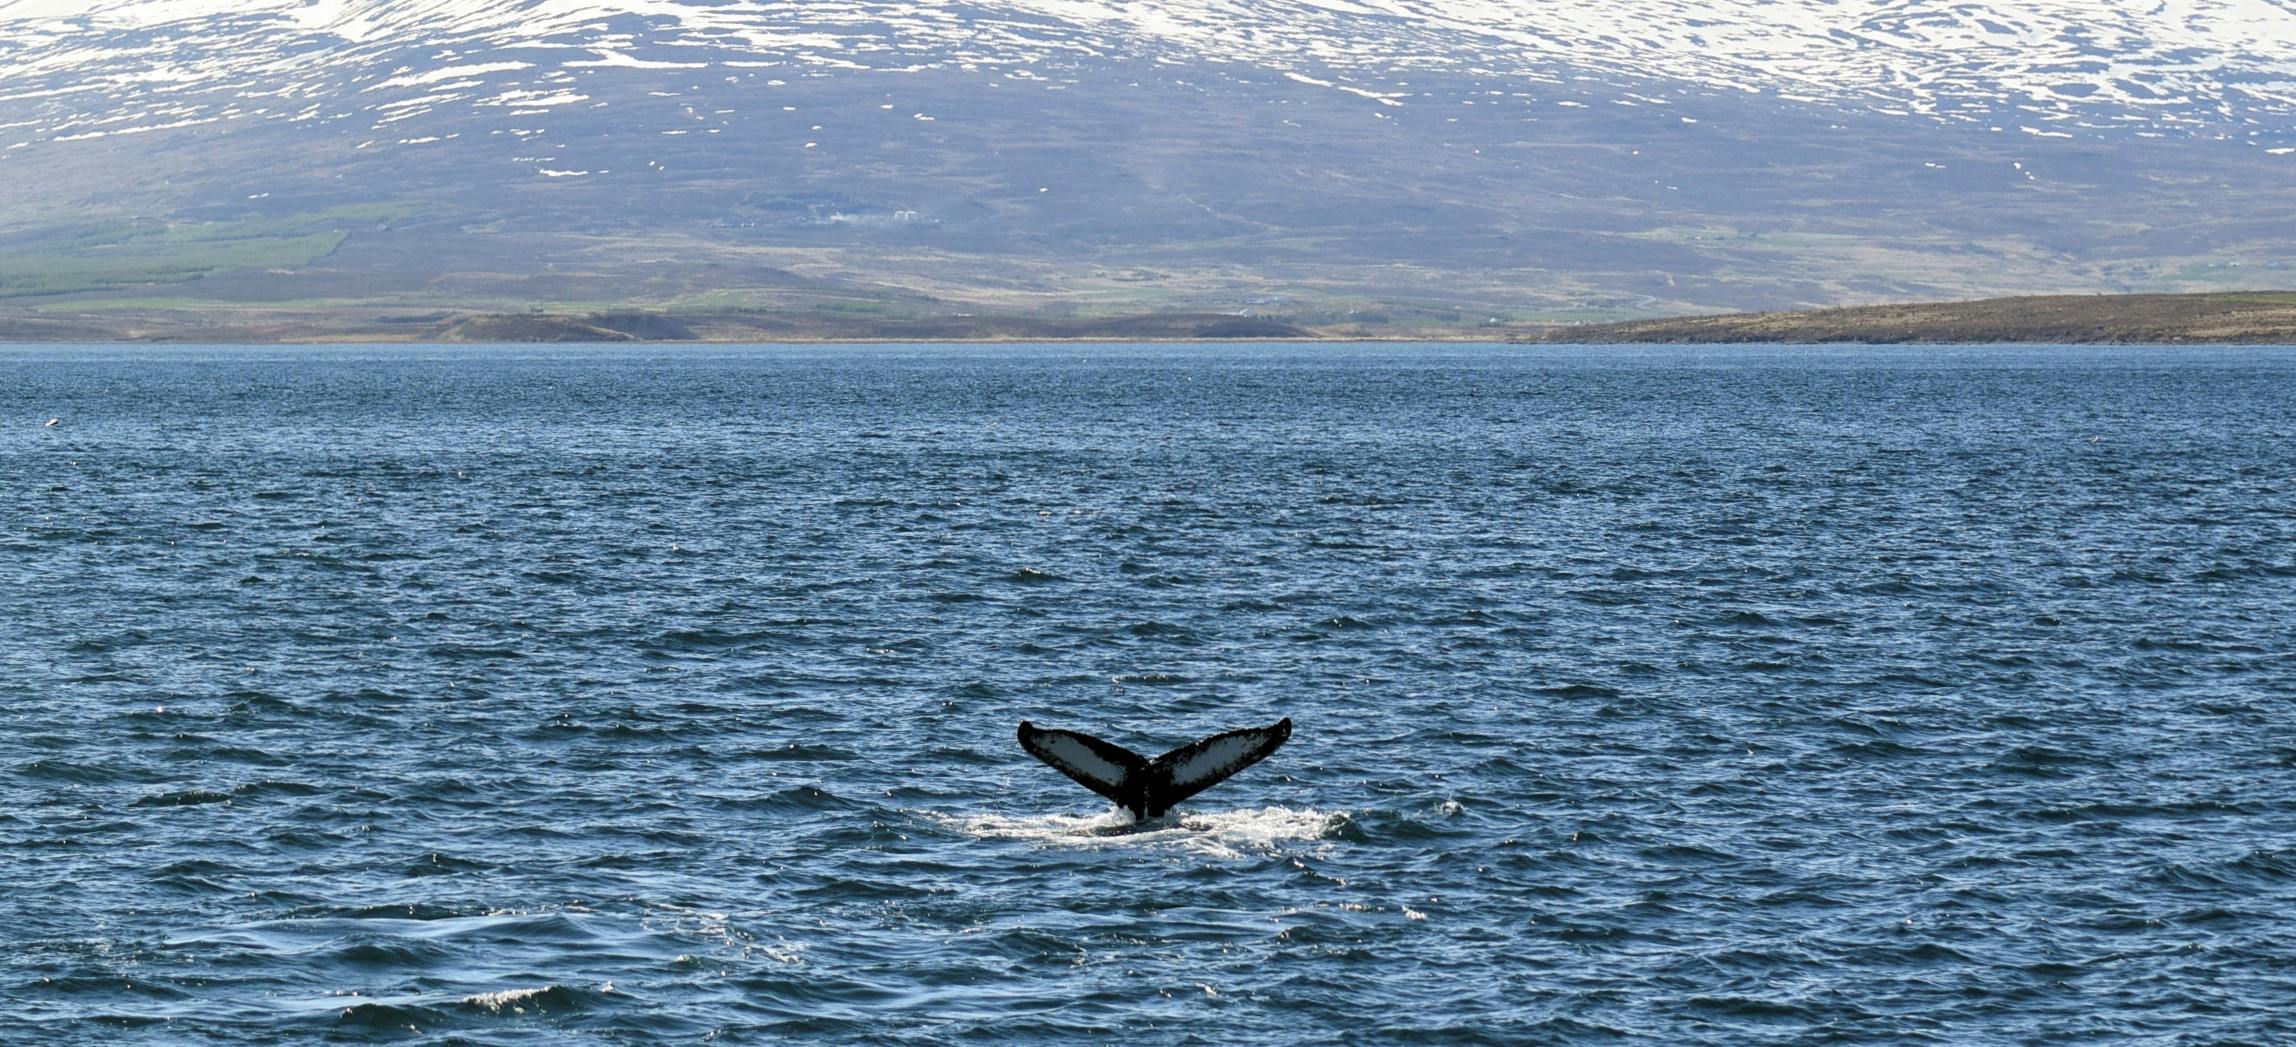 Whale spotting and Lake Mývatn tour